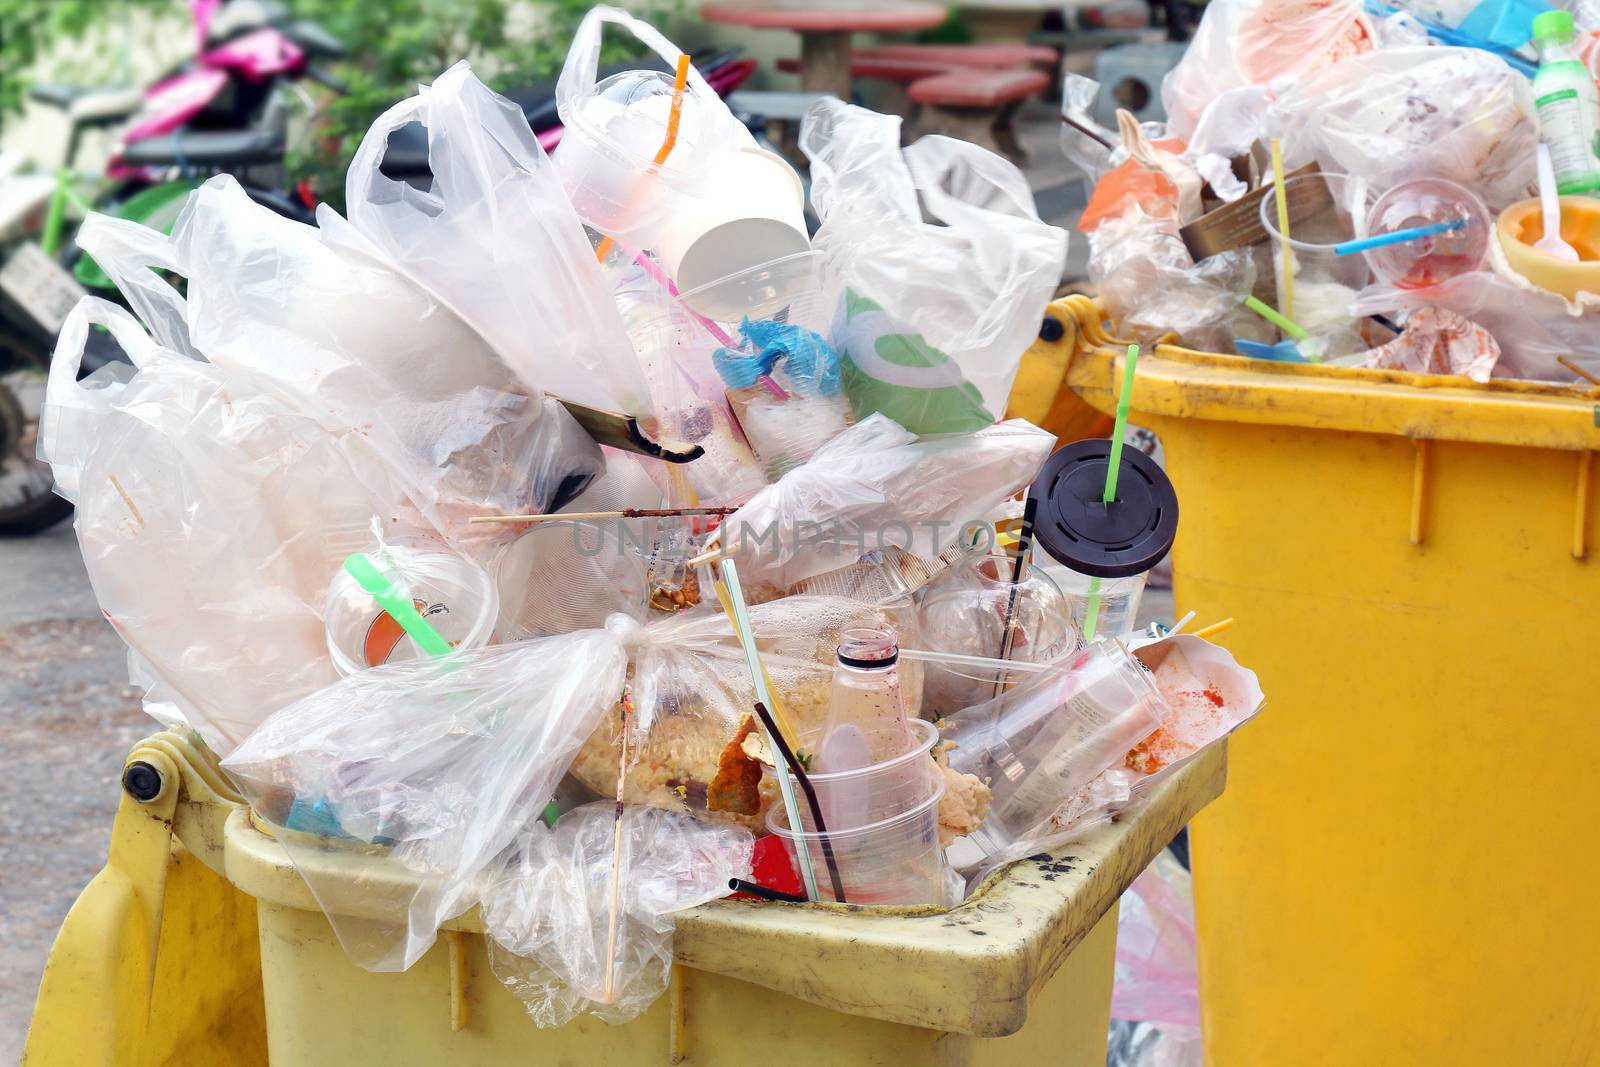 Bin, Dump Garbage, Plastic waste, Pile of Garbage Plastic Waste Bottle and Bag Foam tray many on bin yellow, Plastic Waste Pollution